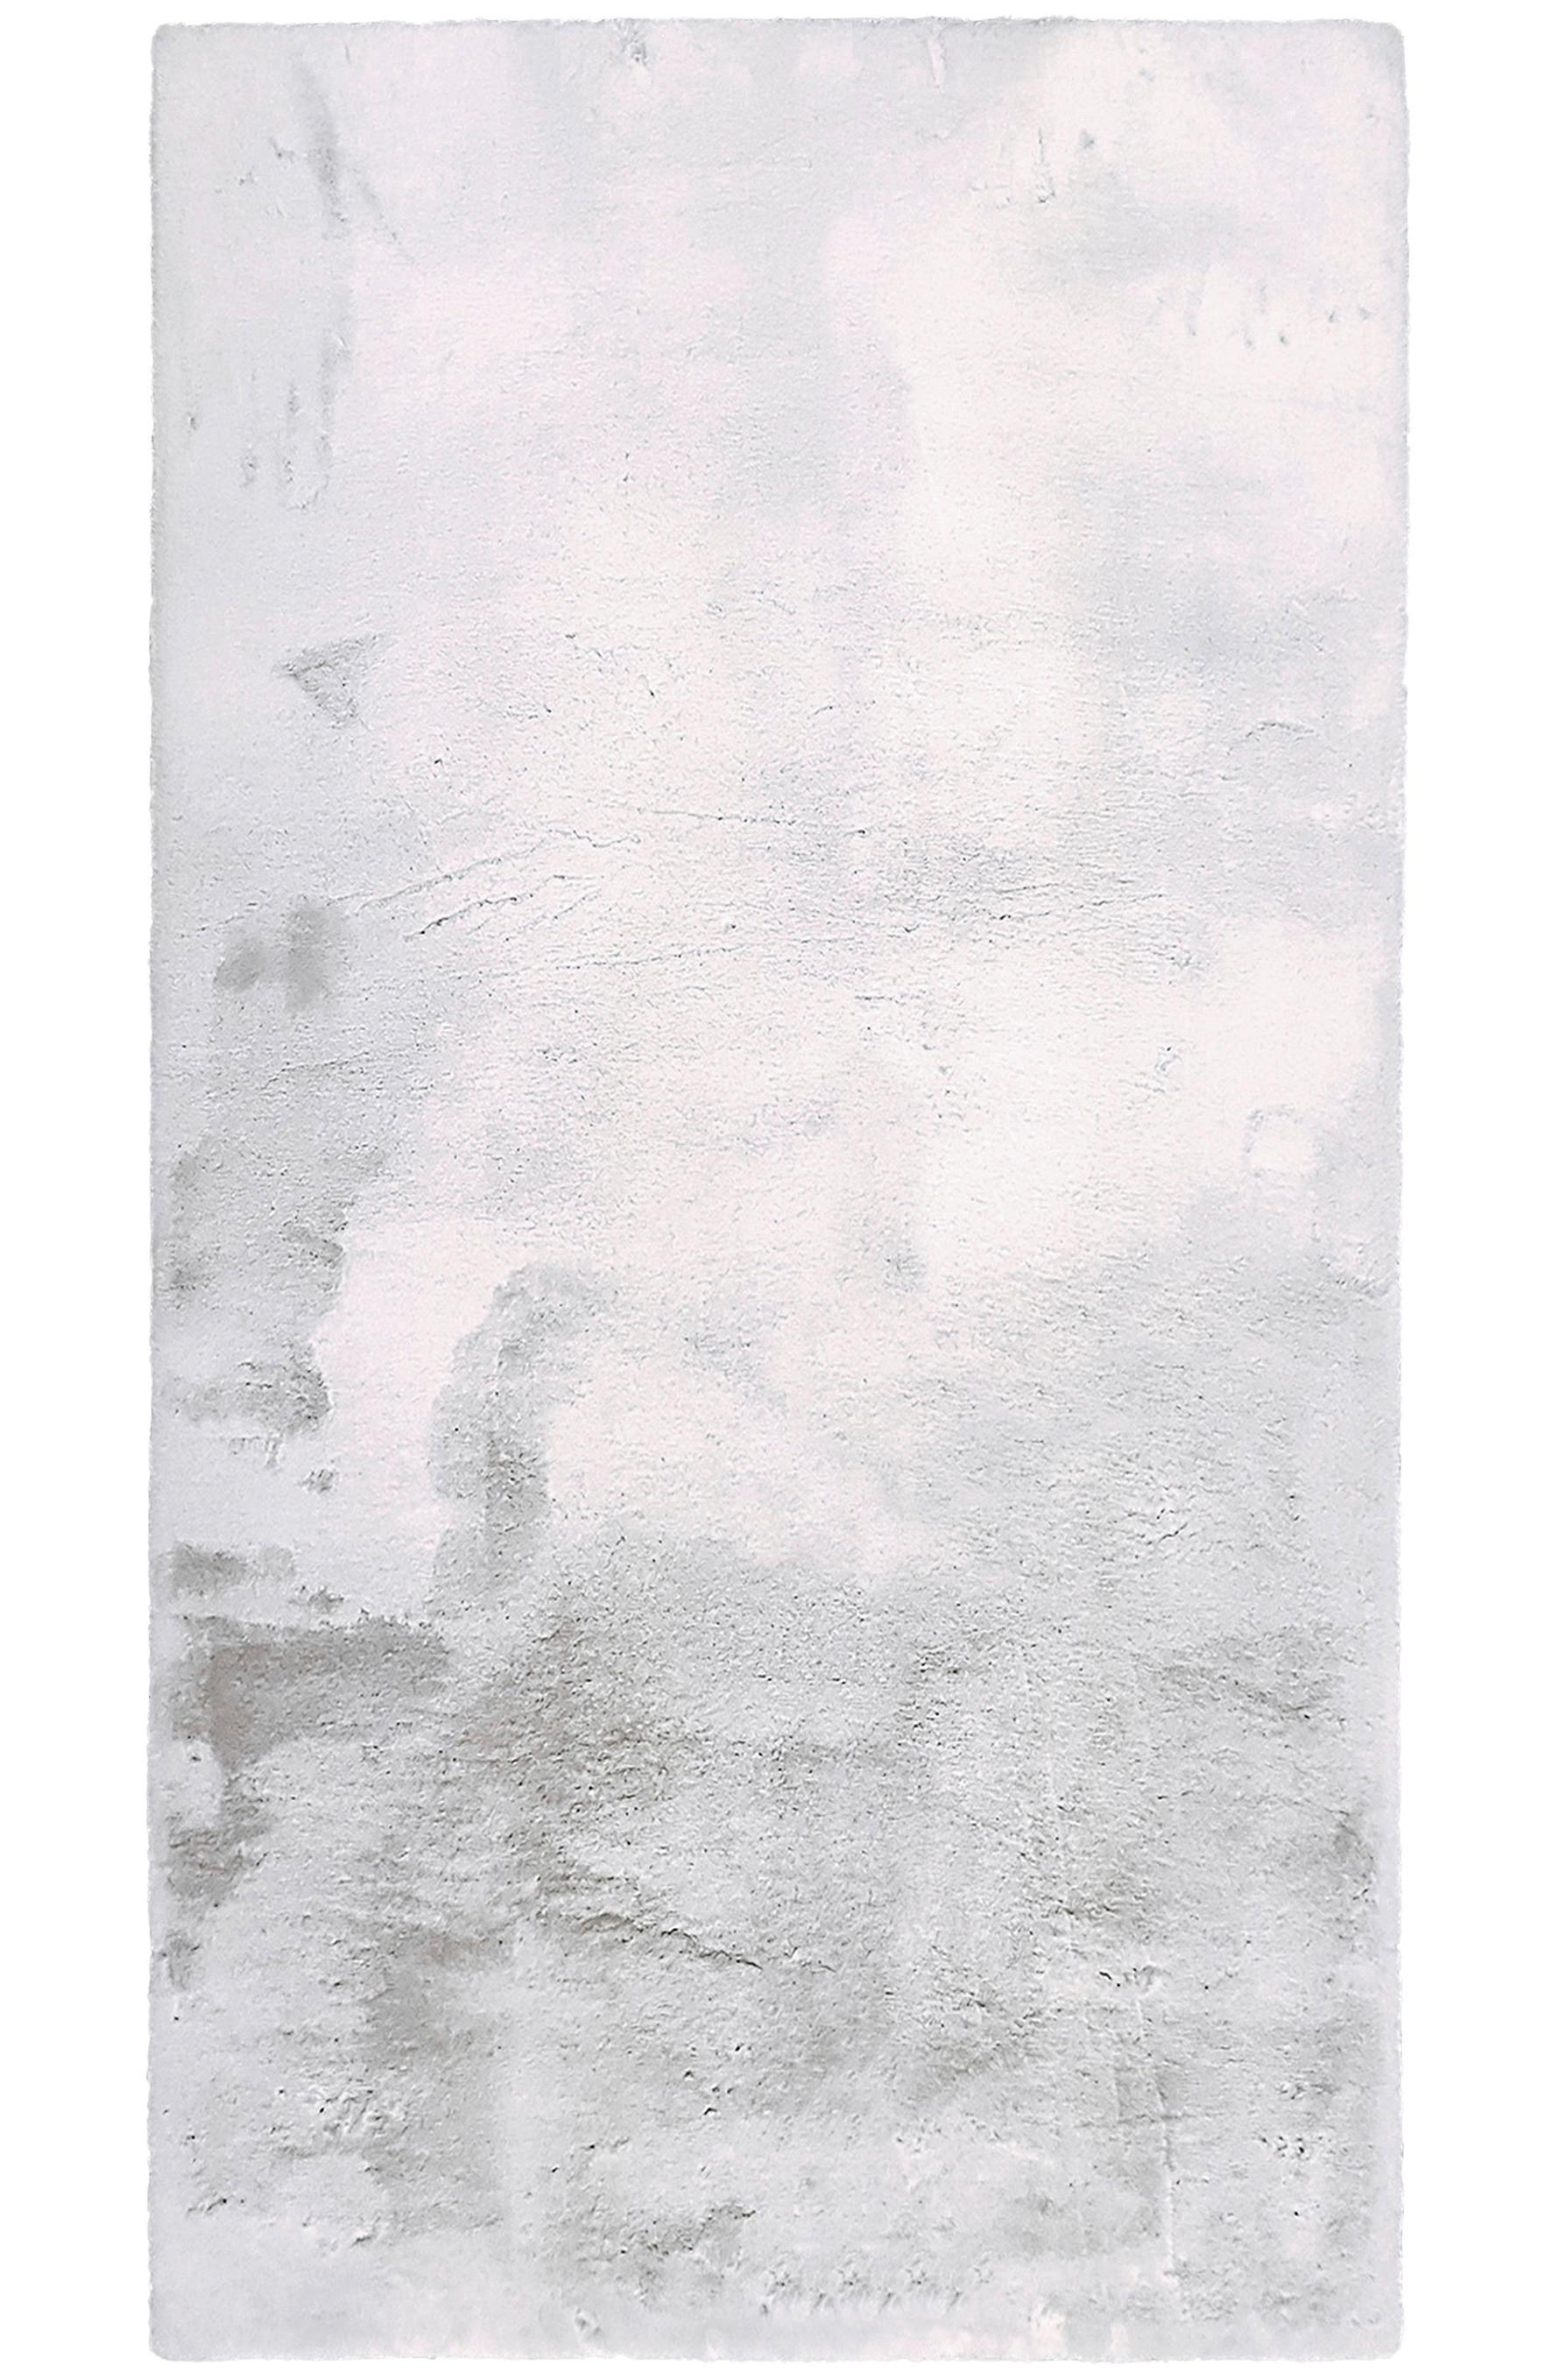 Kunstfell Denise 1 in Silber/Weiß ca. 80x150cm - Silberfarben/Weiß, ROMANTIK / LANDHAUS, Textil/Fell (80/150cm) - Modern Living